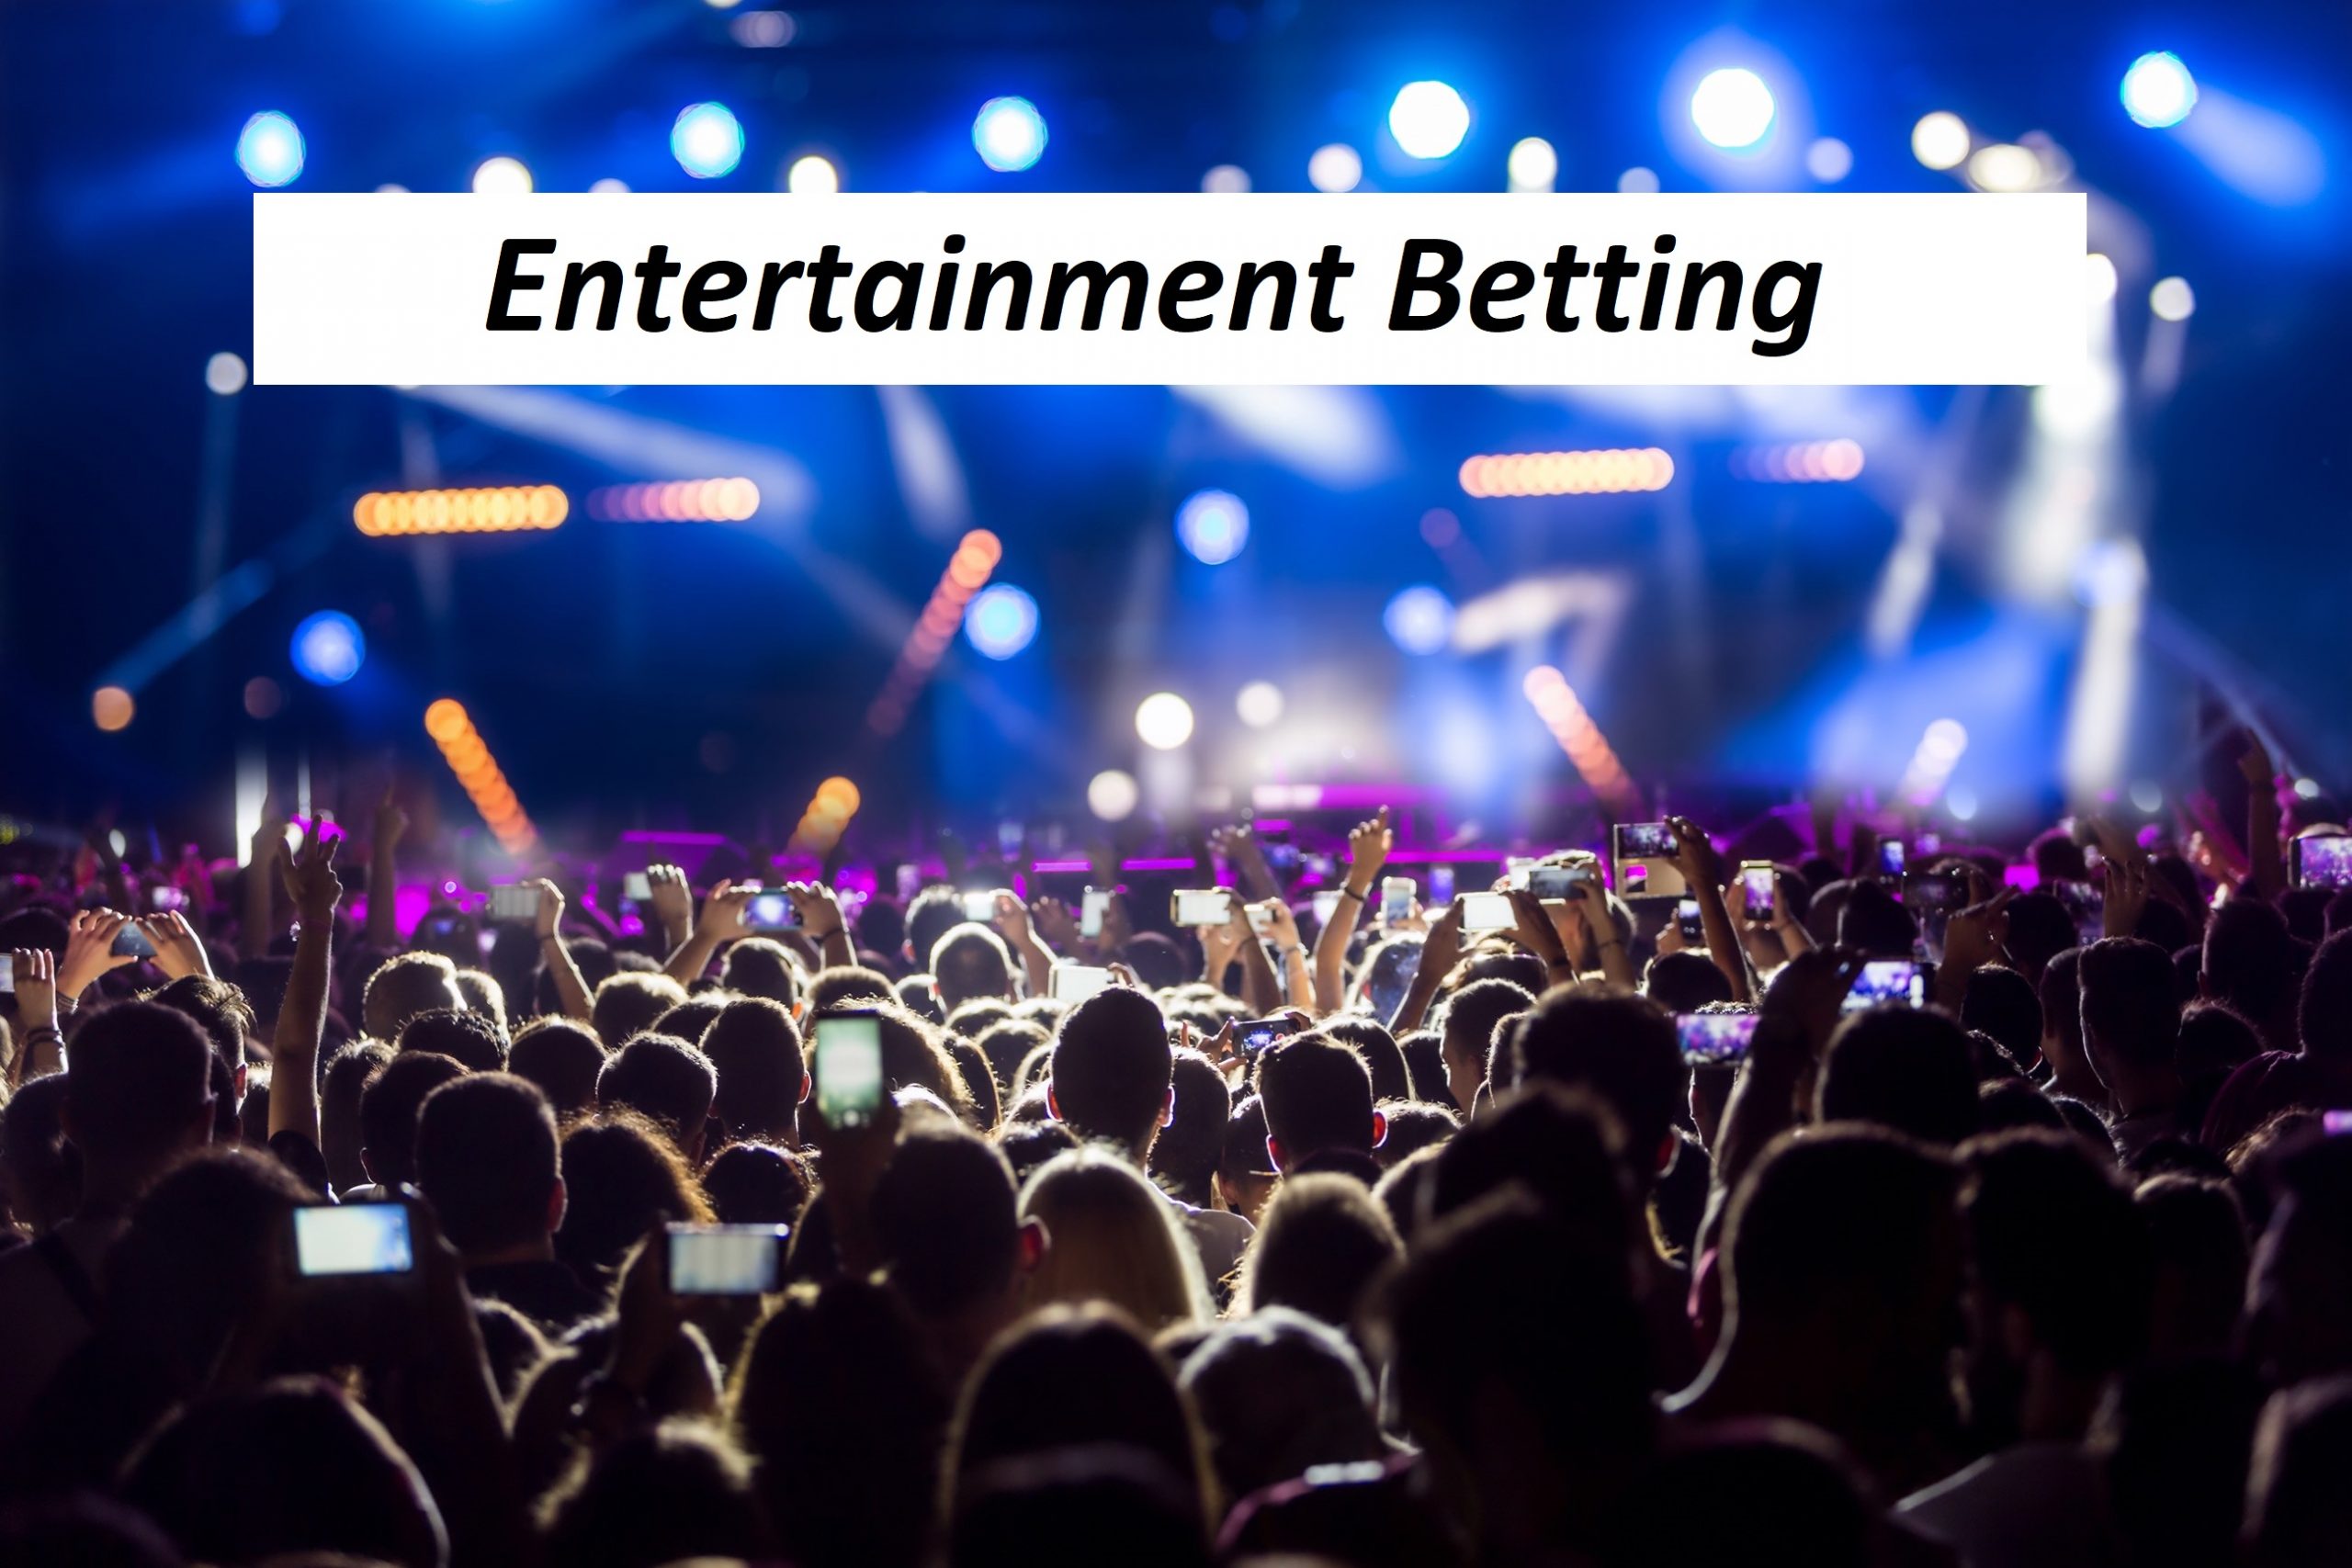 Entertainment betting